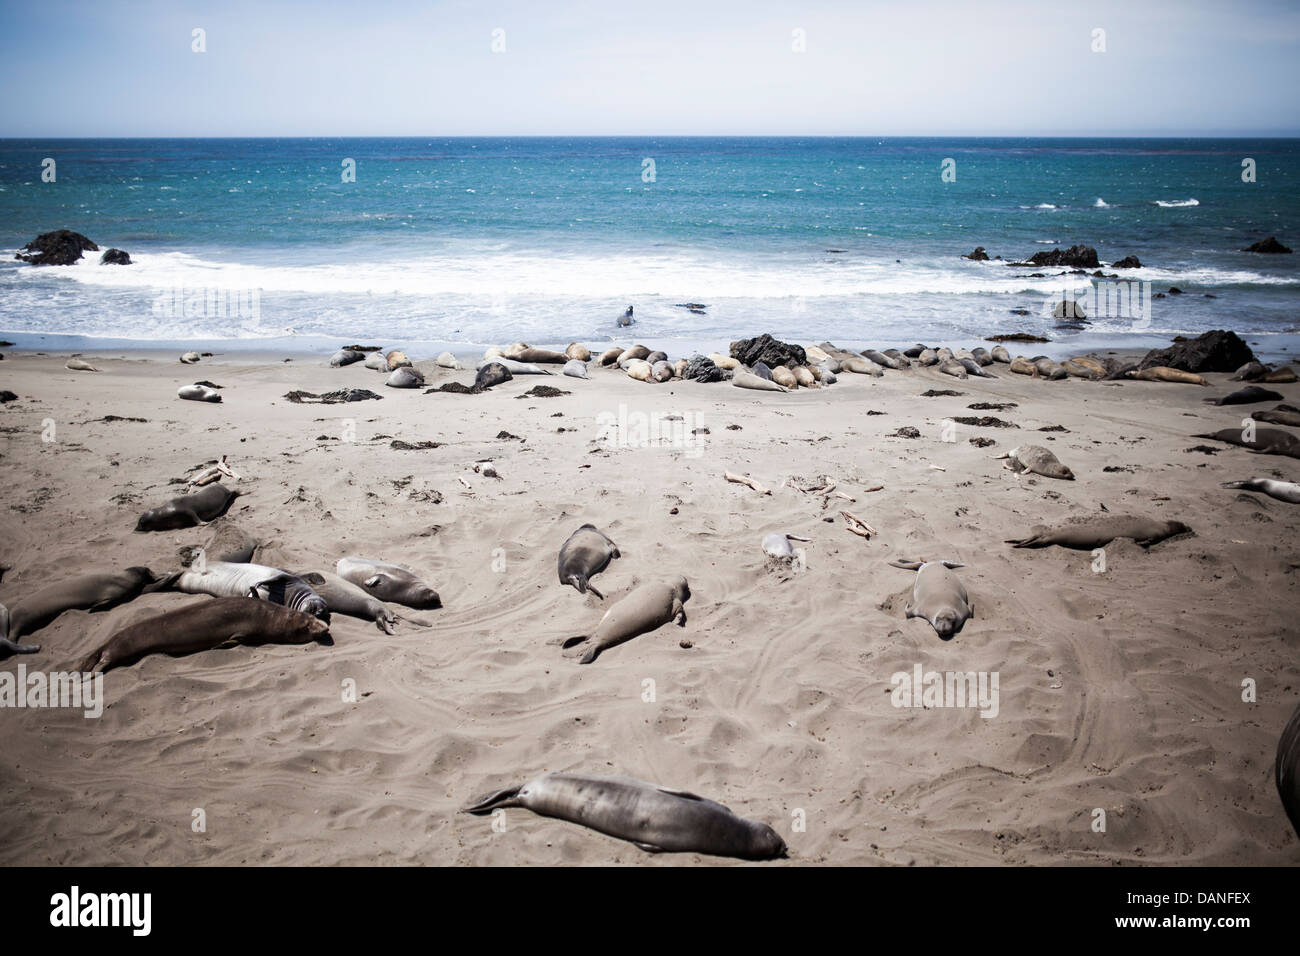 Sea Loins sunbathing on the beach in the Northern California Coast. Stock Photo